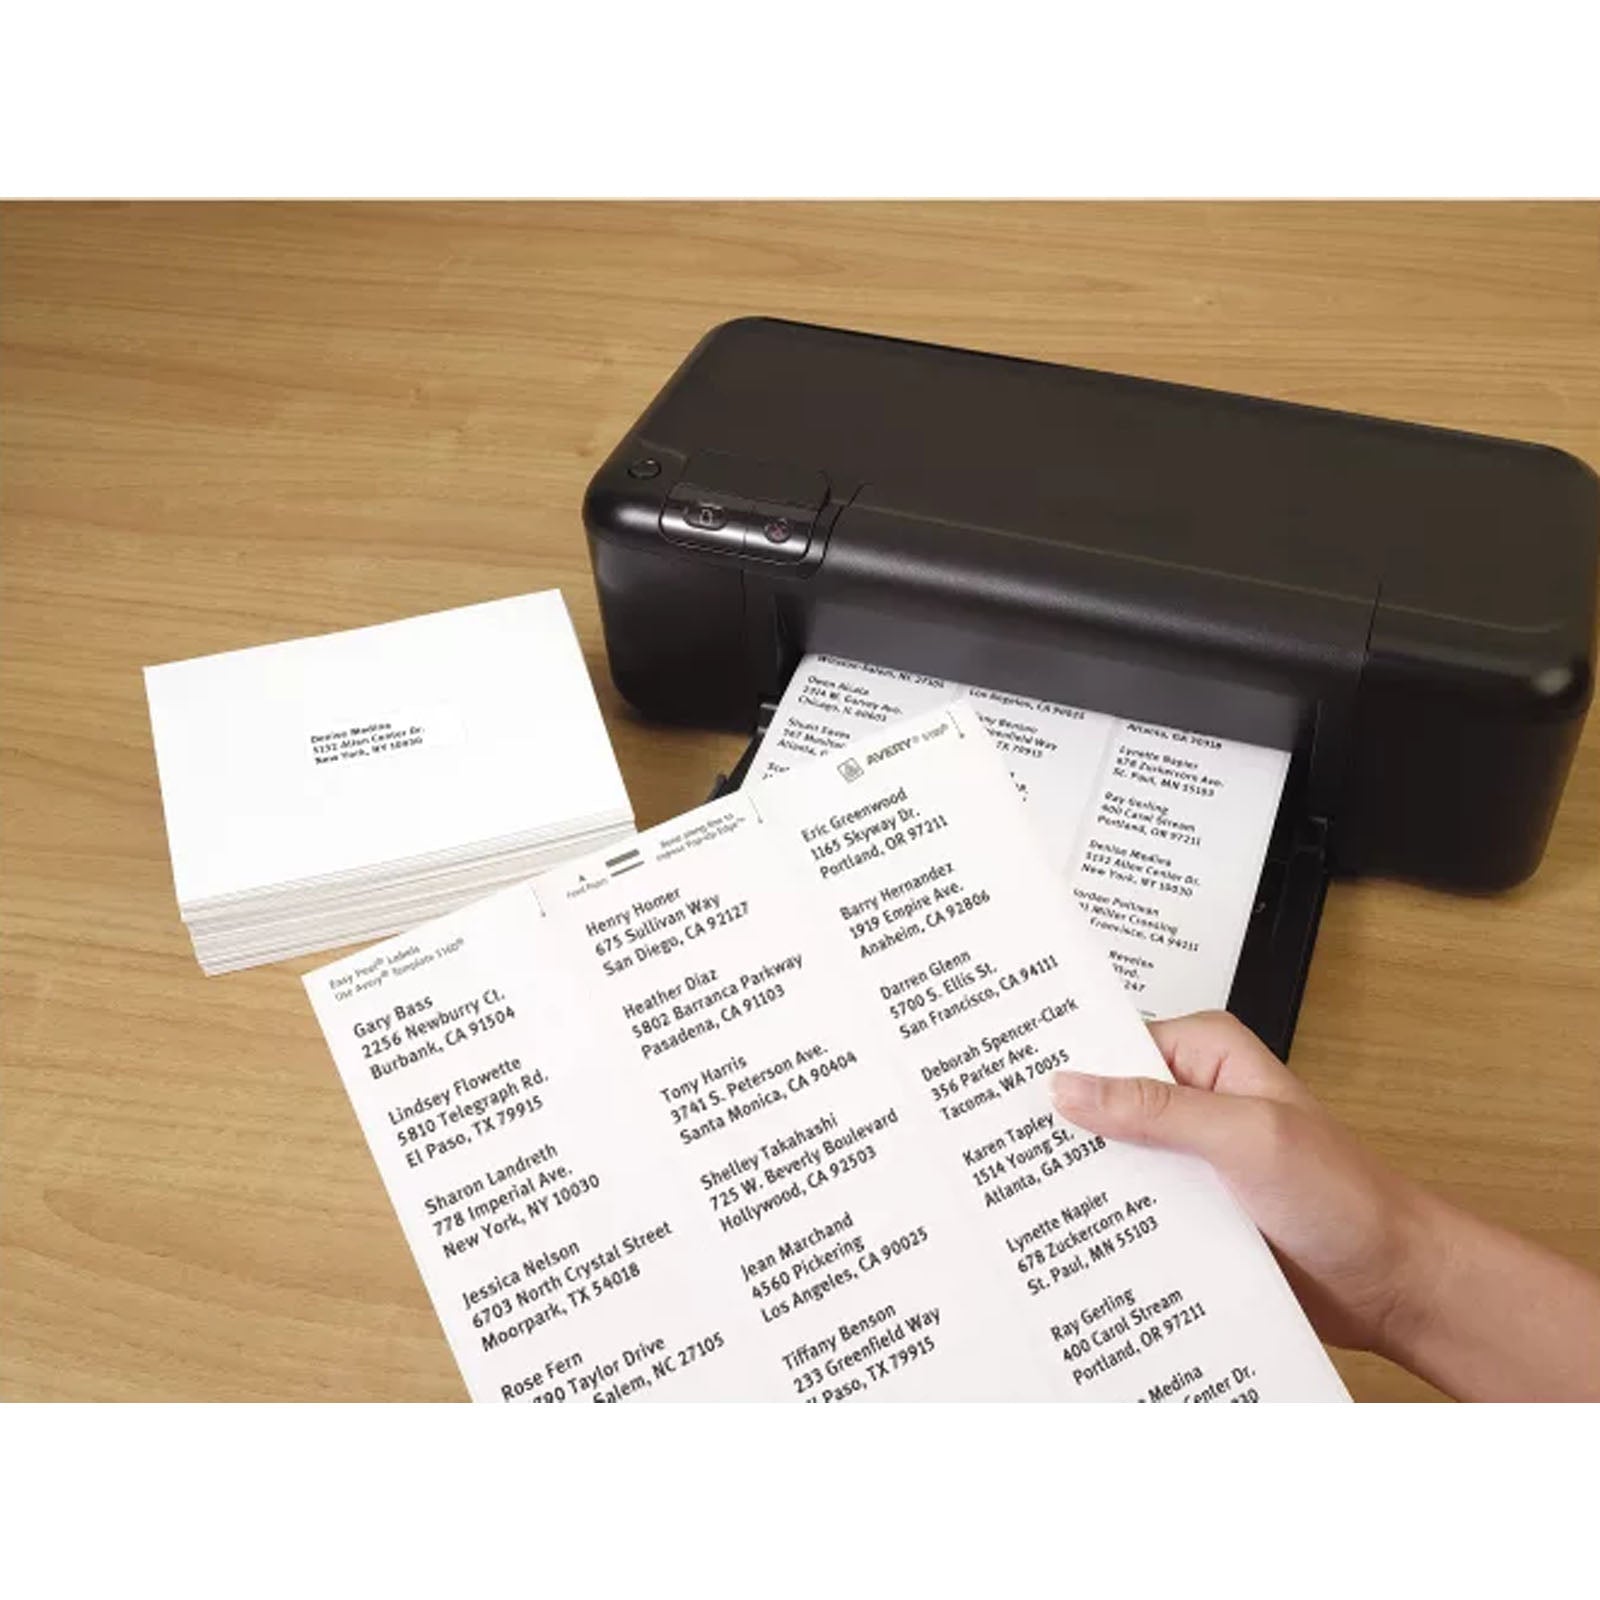 Easy Peel® Address Labels, Permanent Adhesive, 1" x 2-5/8", 3000 Labels